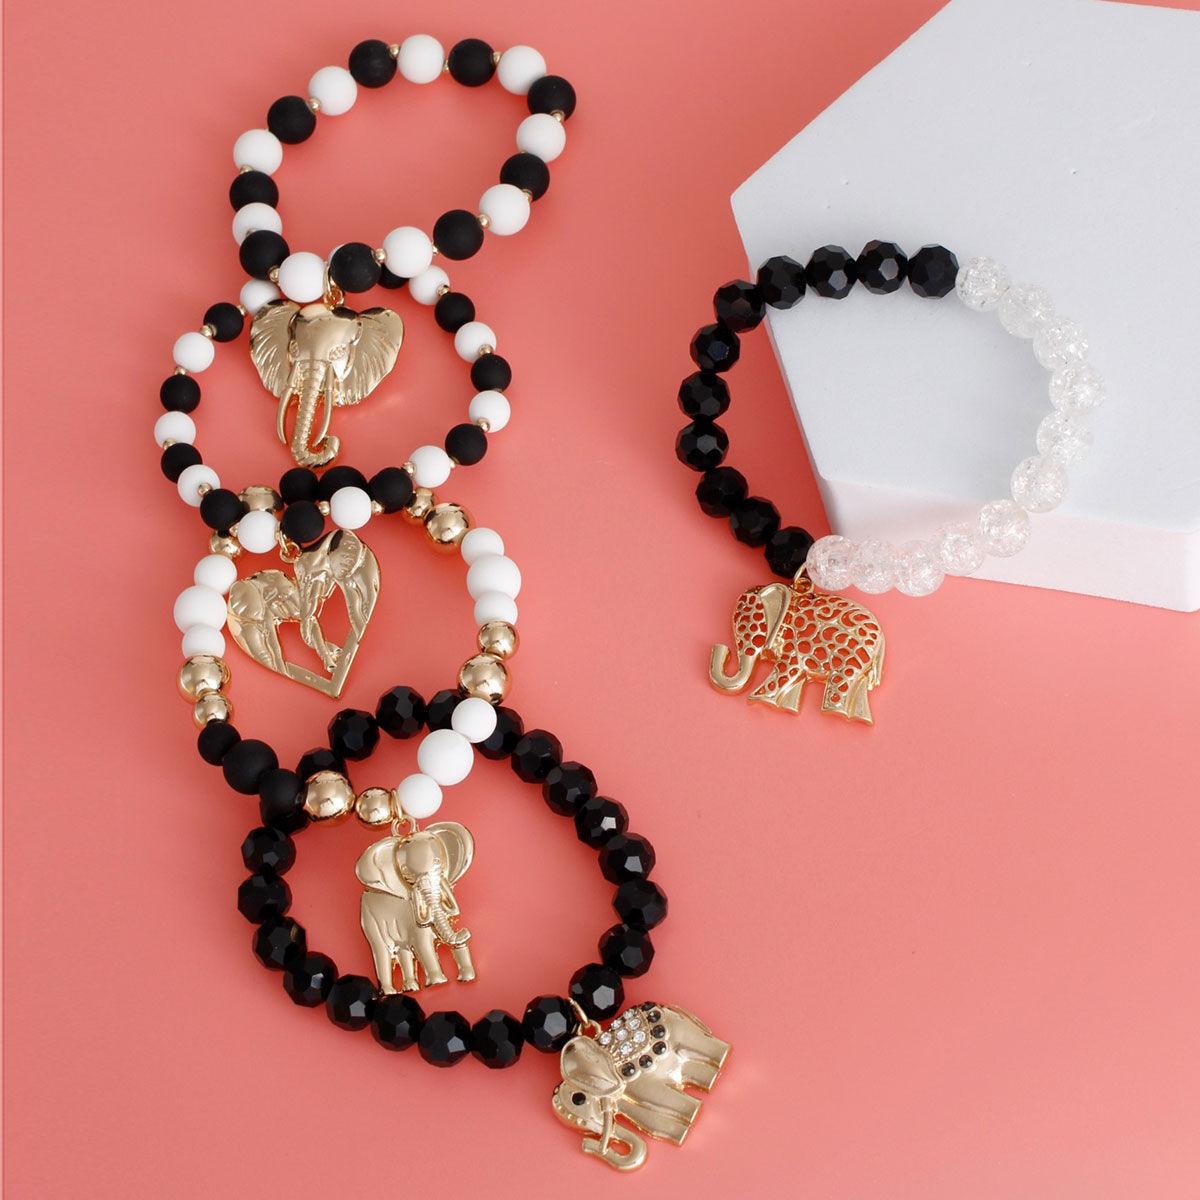 Stylish Monochromatic Beaded Bracelets with Charms - Shop Now!